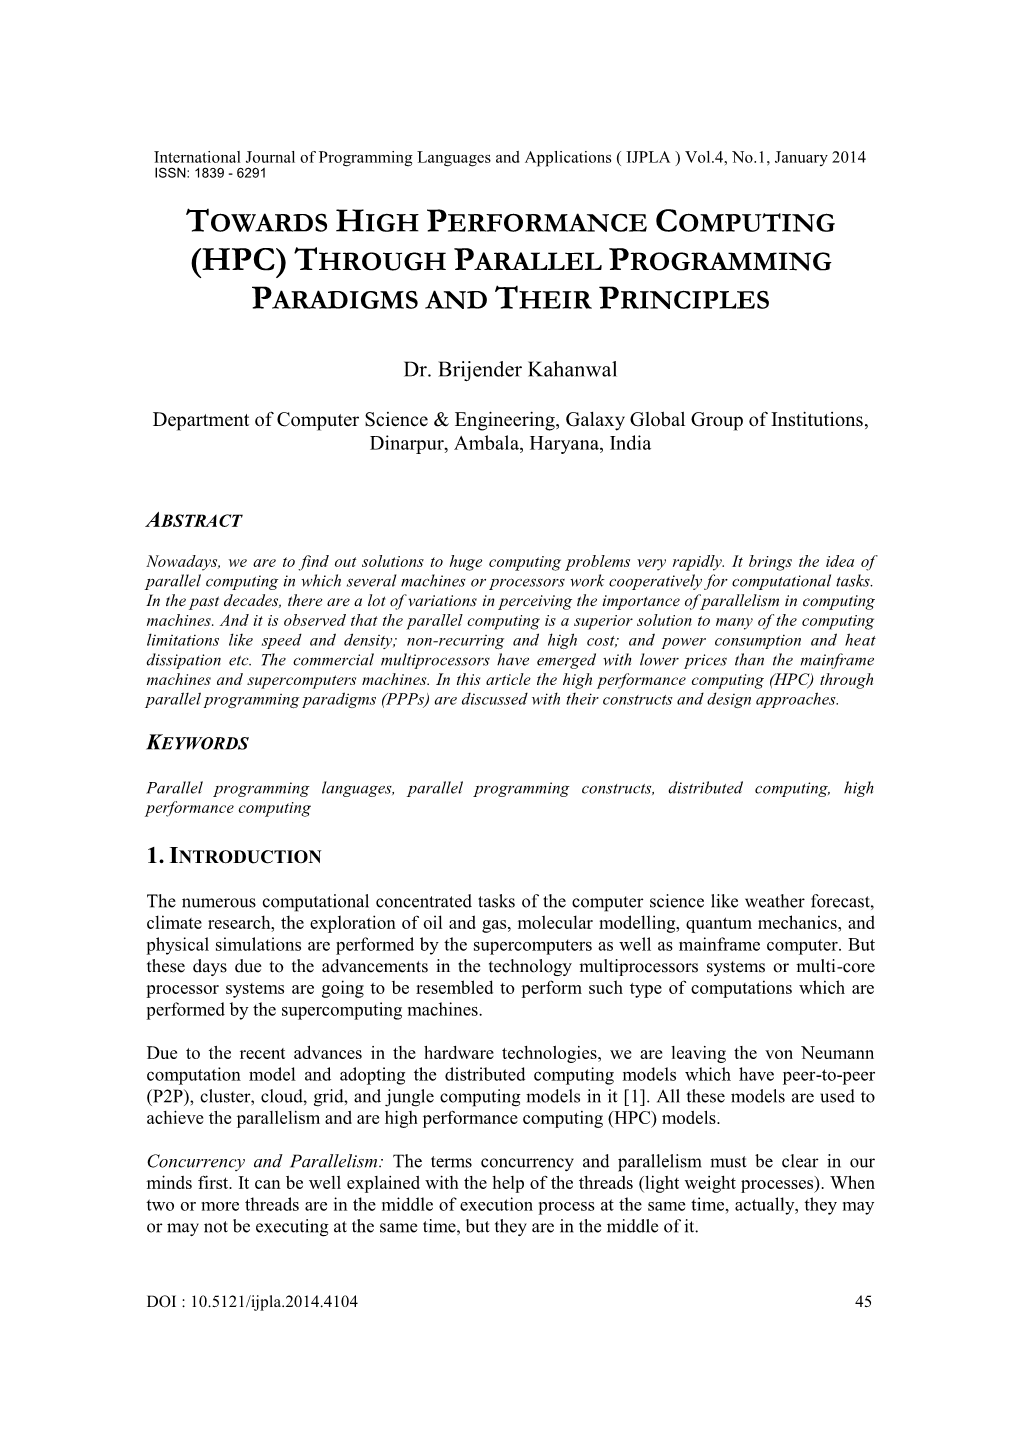 (Hpc) Through Parallel Programming Paradigms and Their Principles